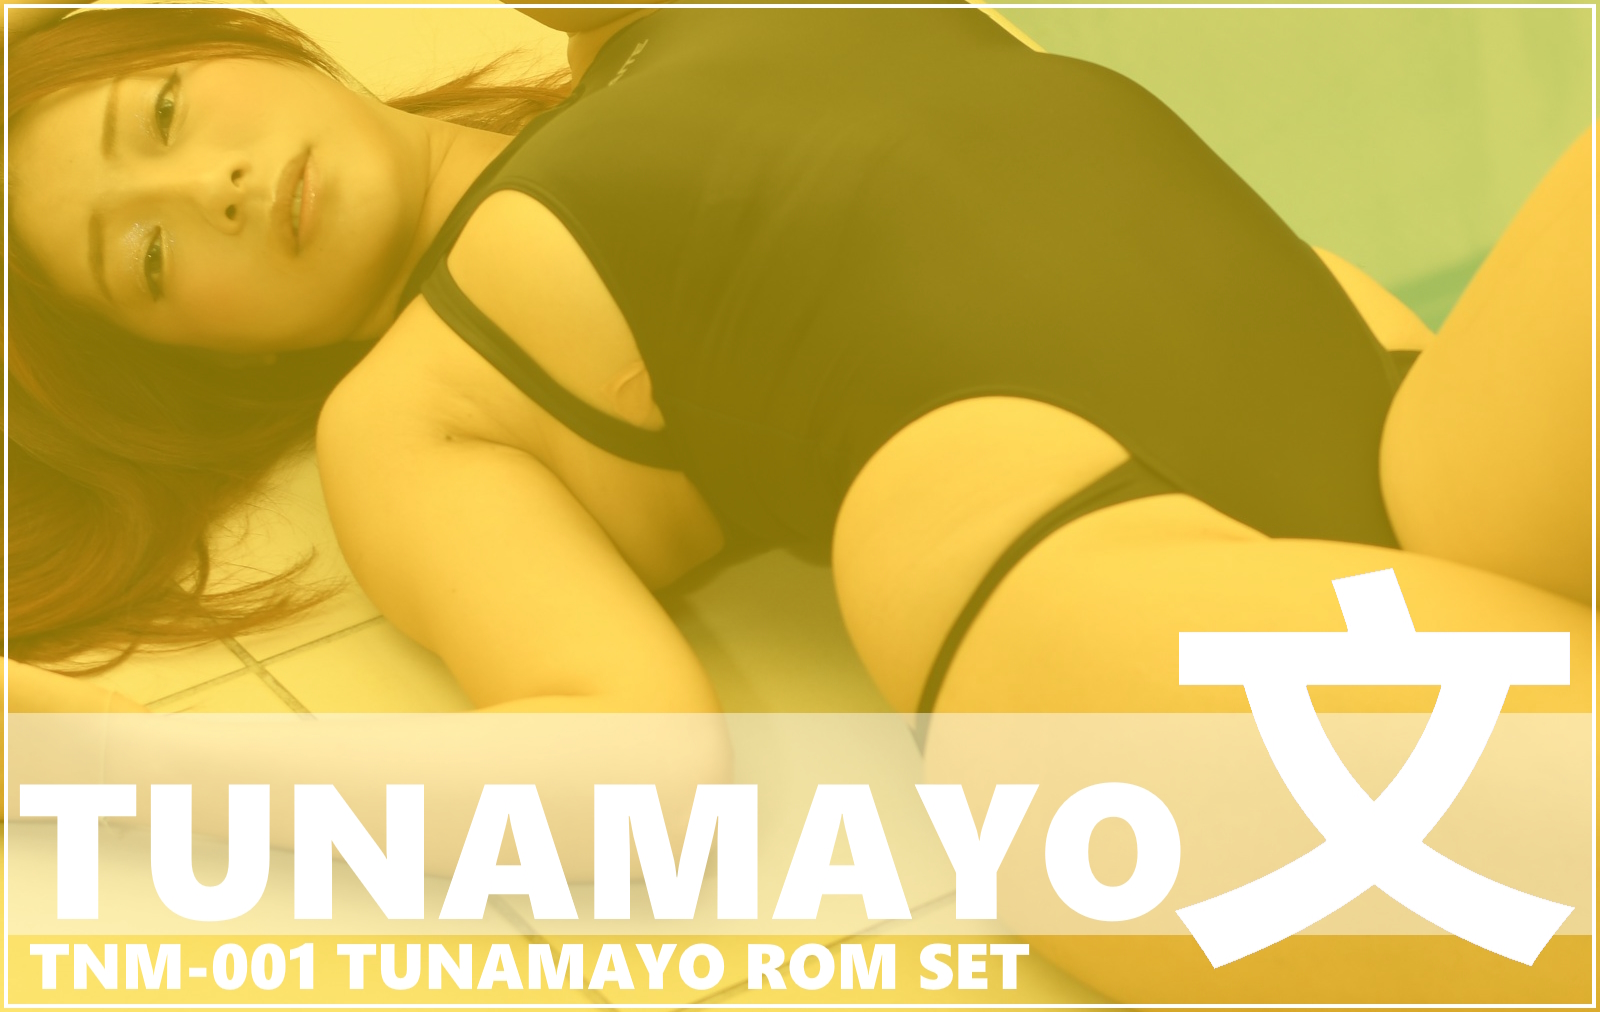 TNM-001 Tunamayo ROM Set